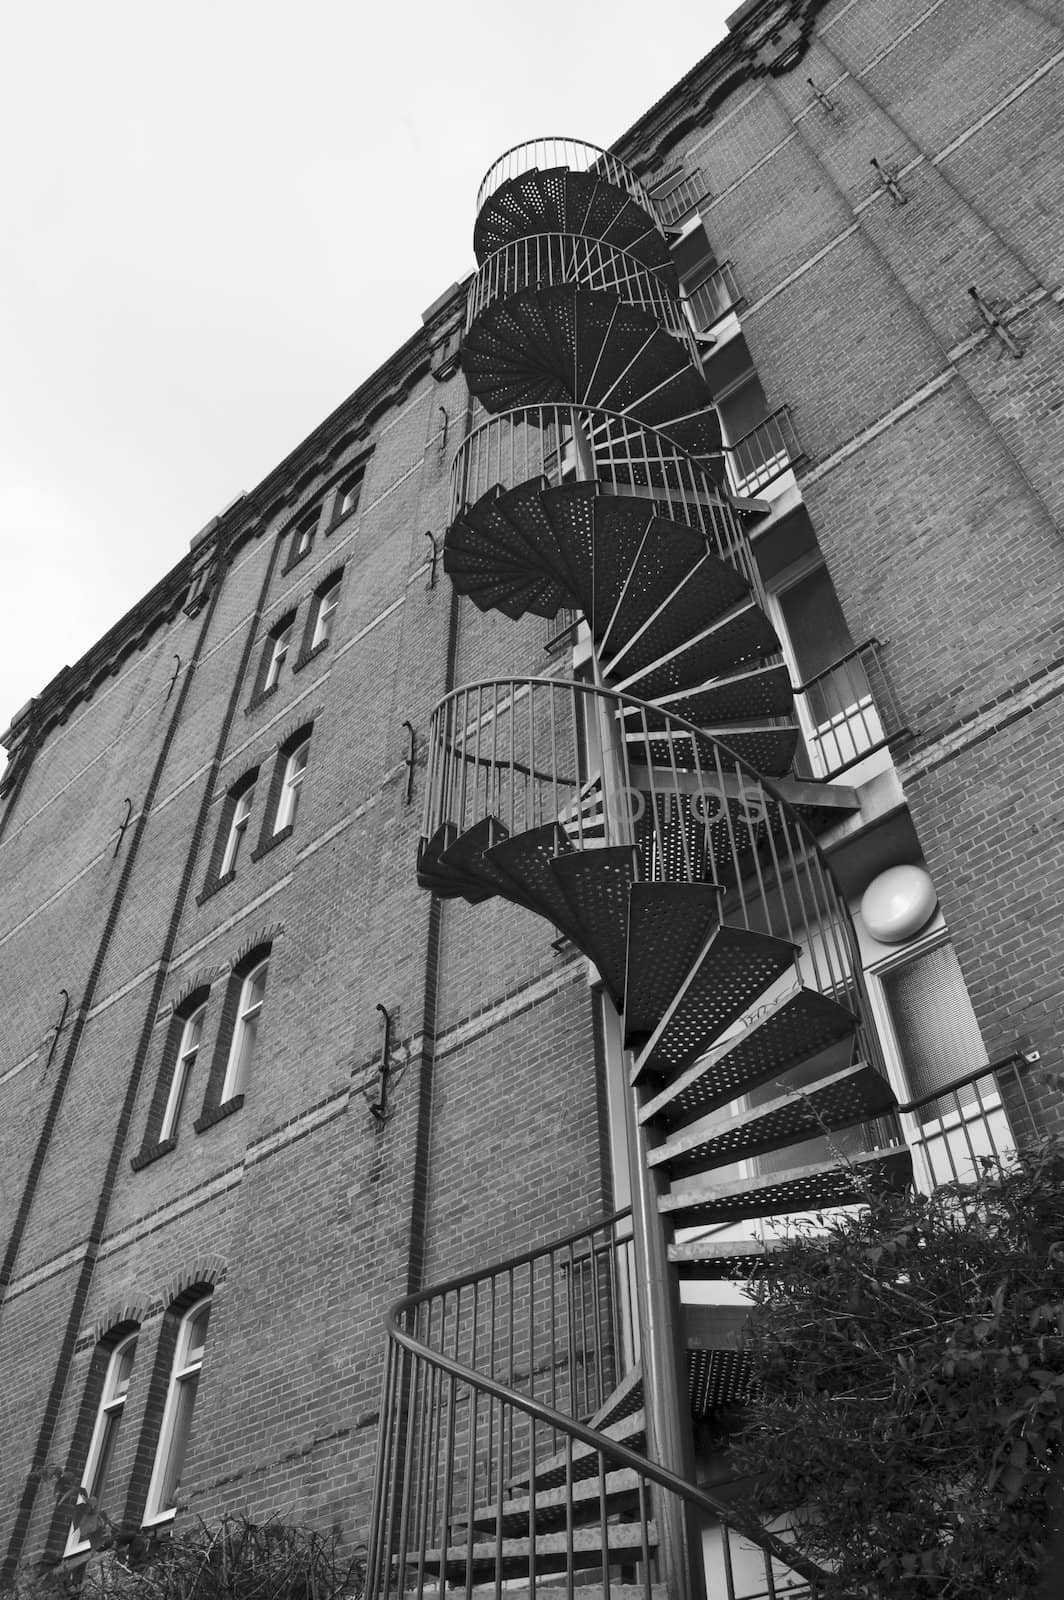 Winding stairway in tenement house in Amsterdam.